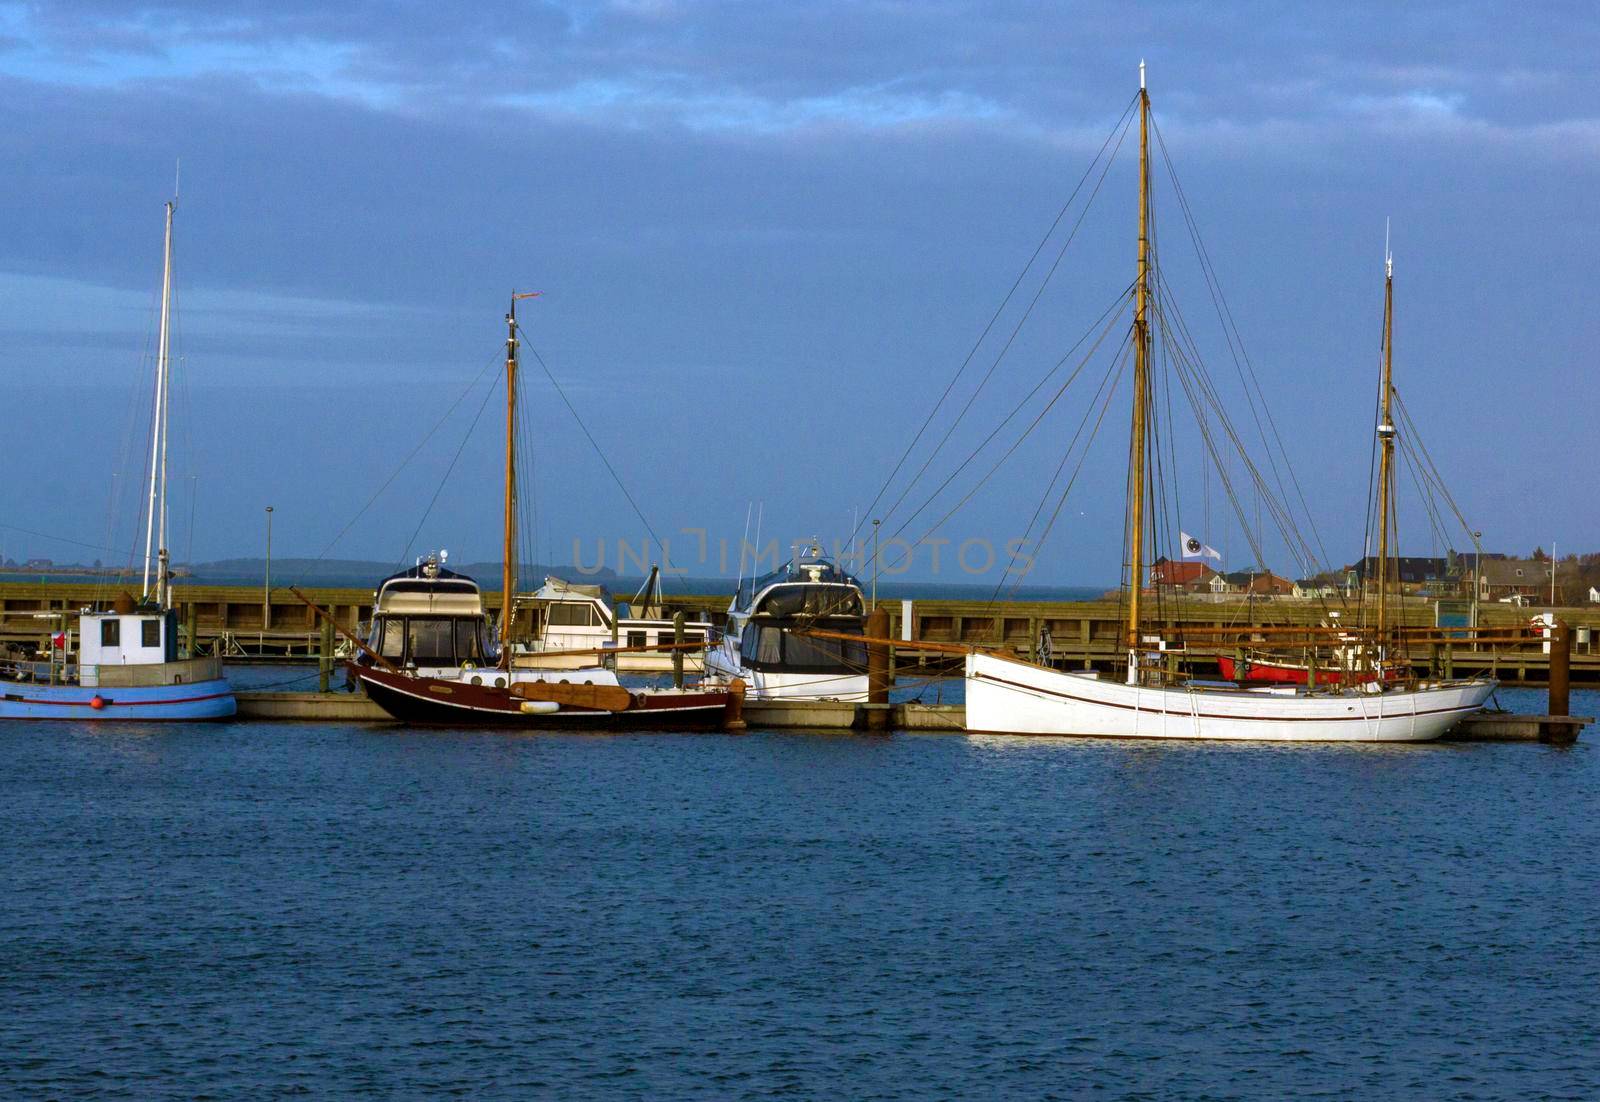 Sailing ships anchored at the bay in Lemvig, Denmark